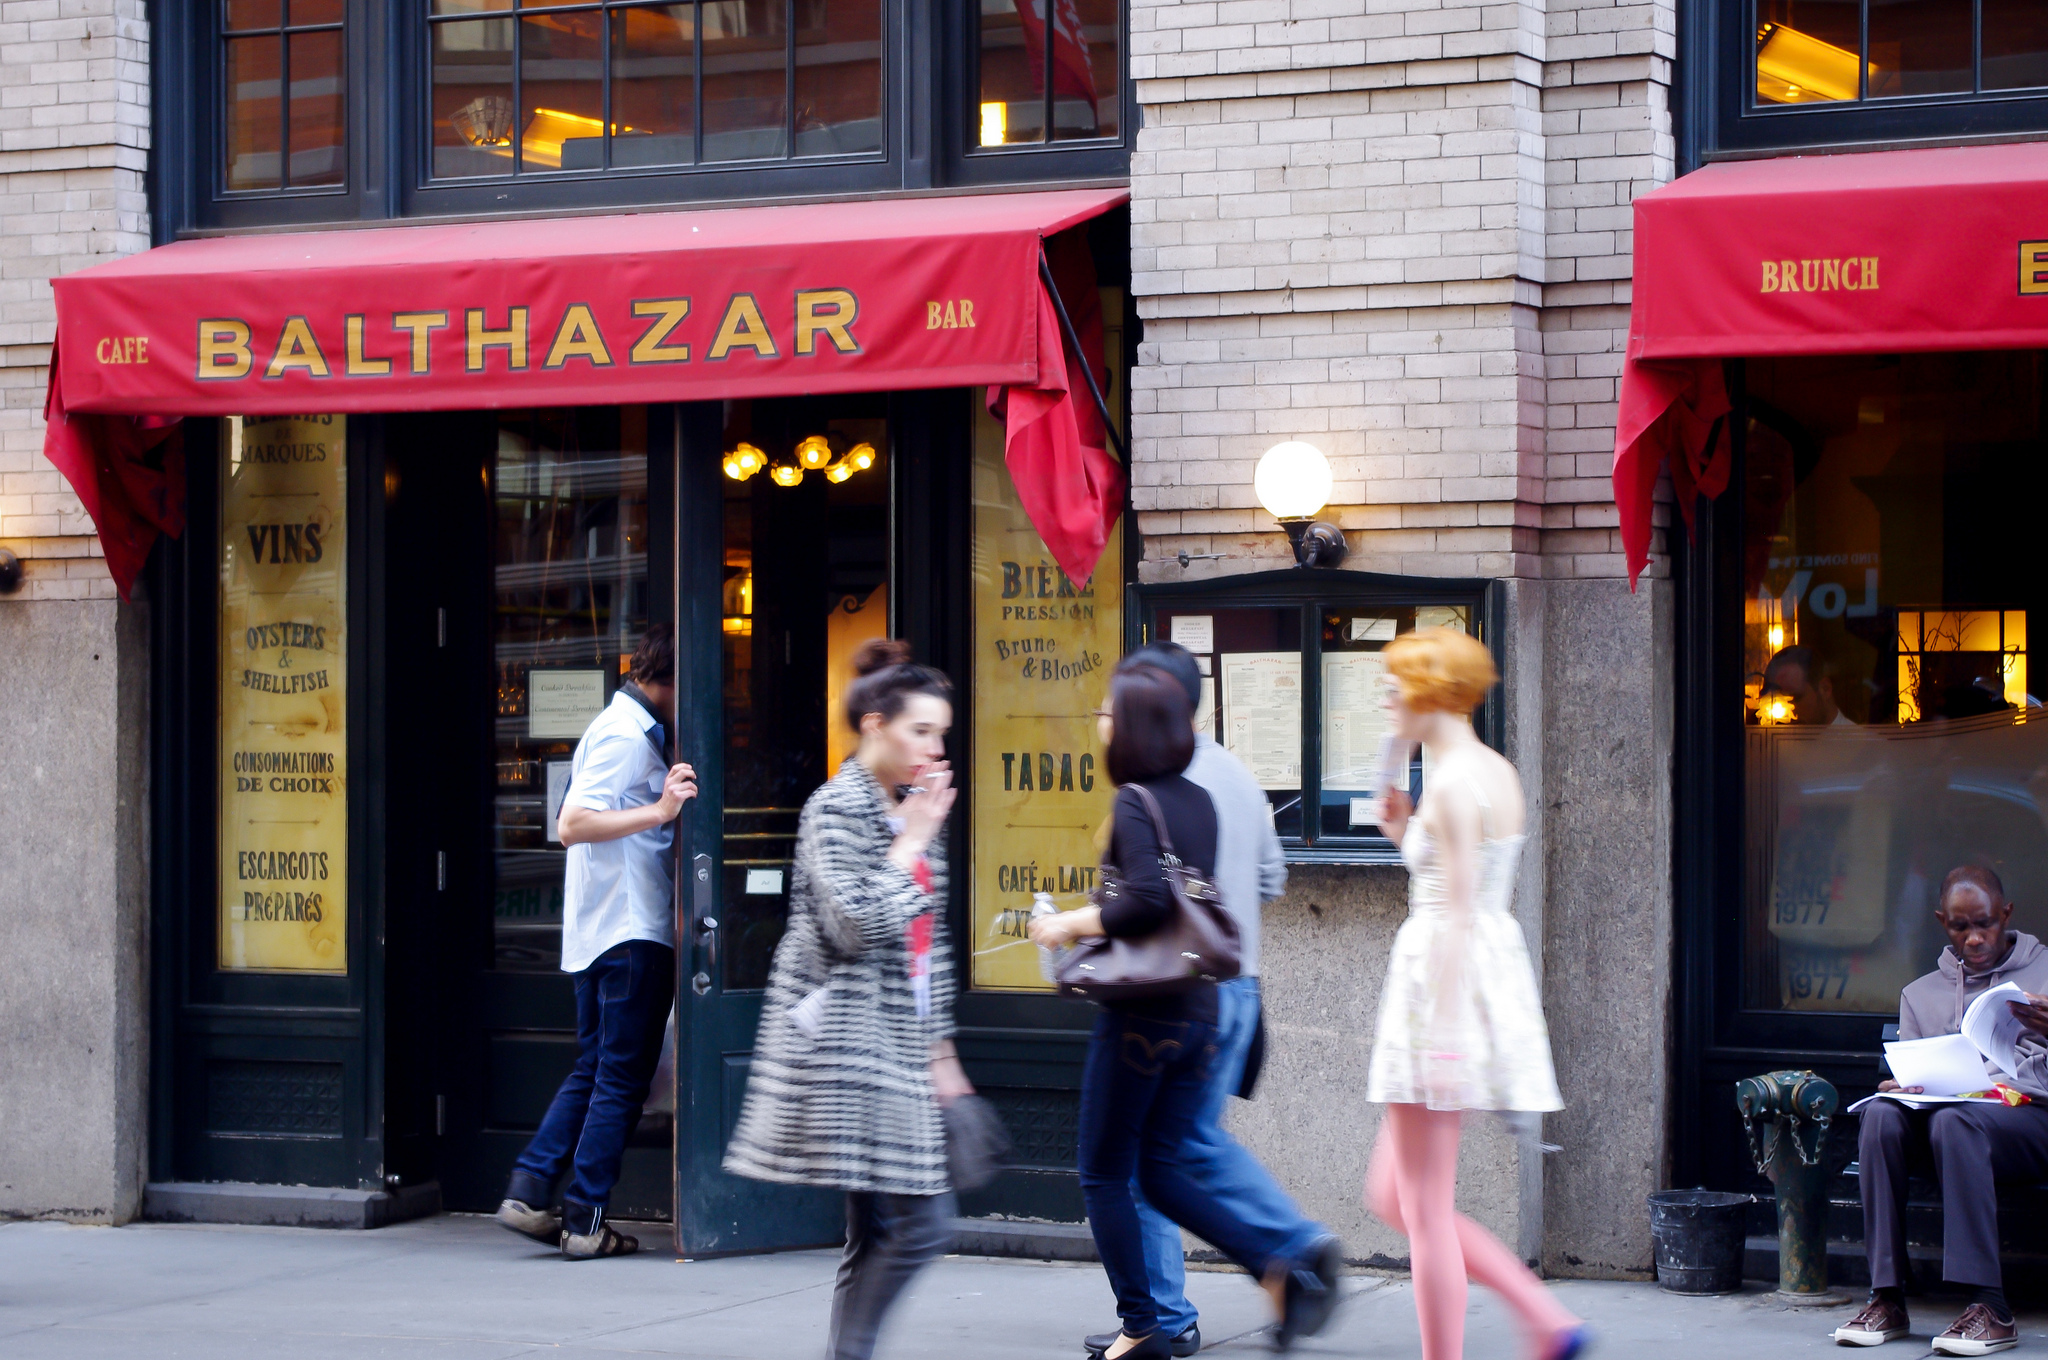 Cafe Balthazar in New York. Photo by alphacityguides.